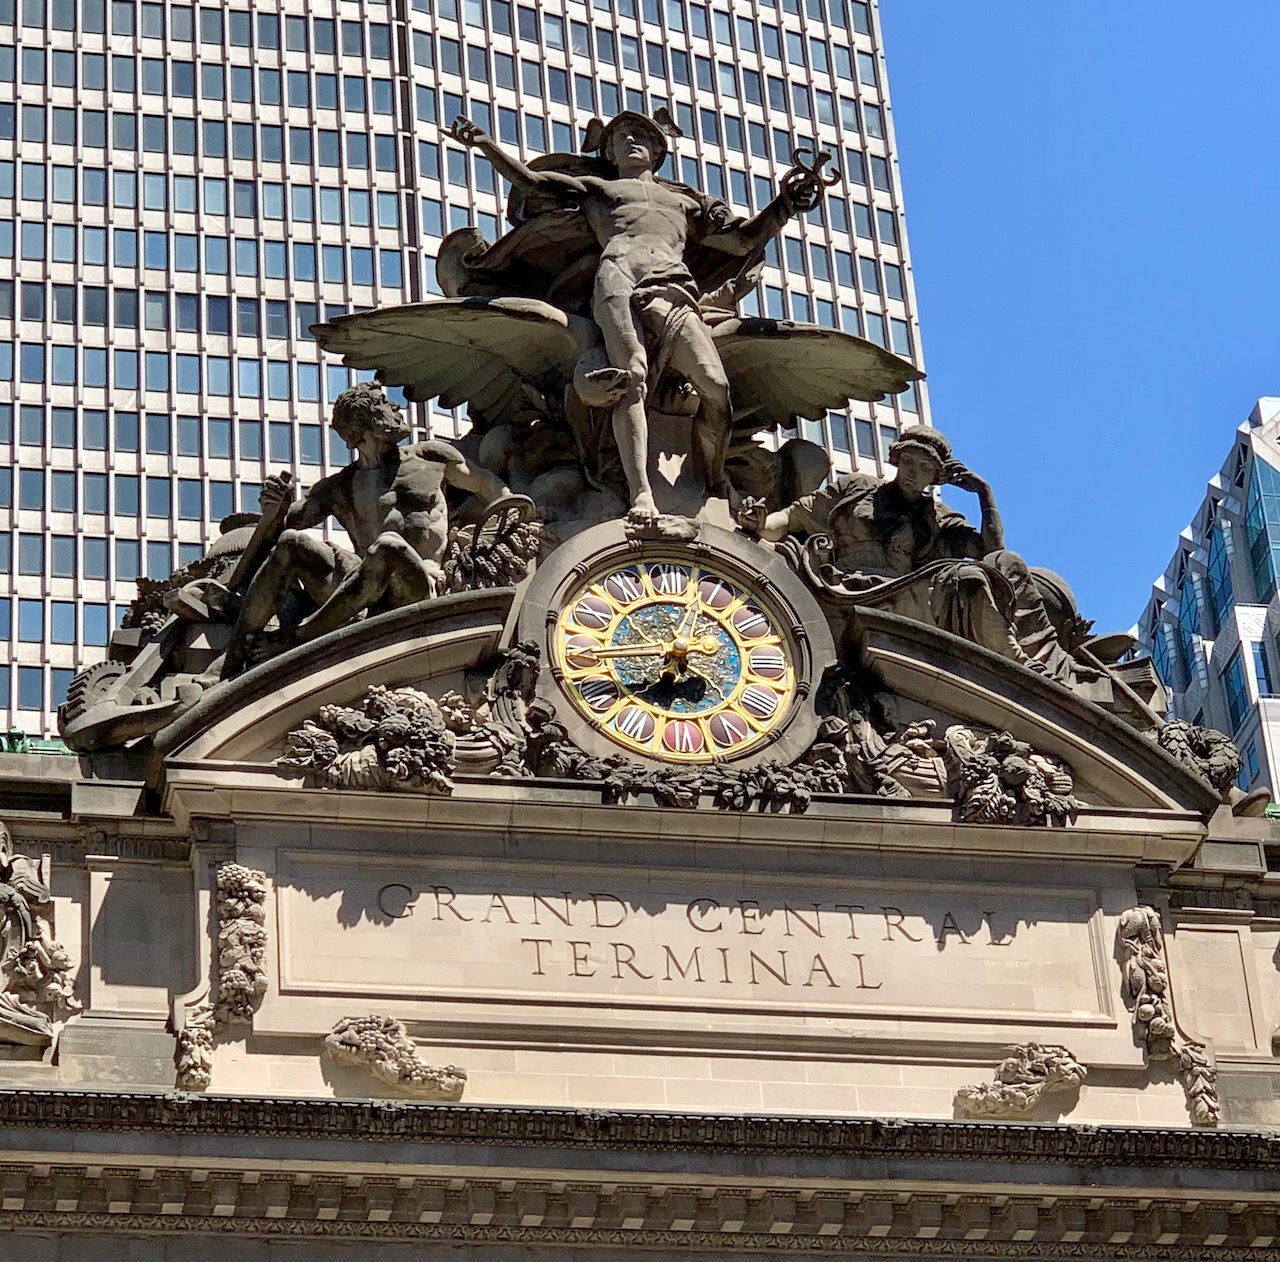 Grand central terminal clock